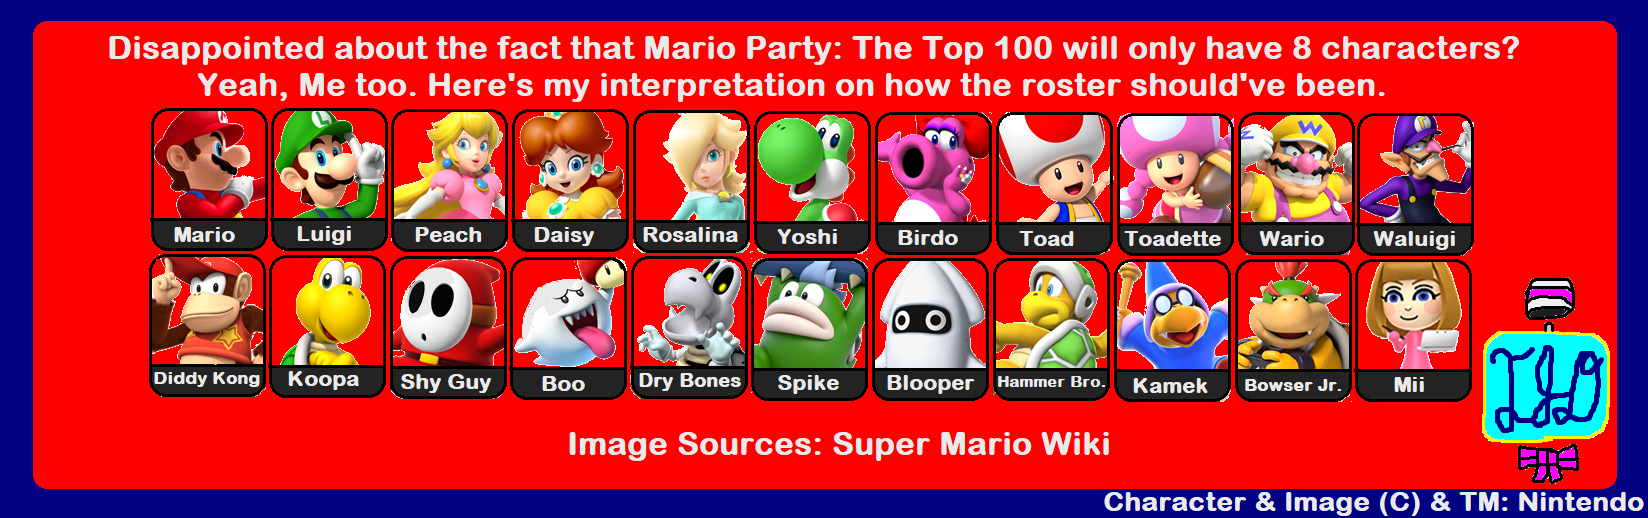 Bowser Jr., Mario Party Wiki